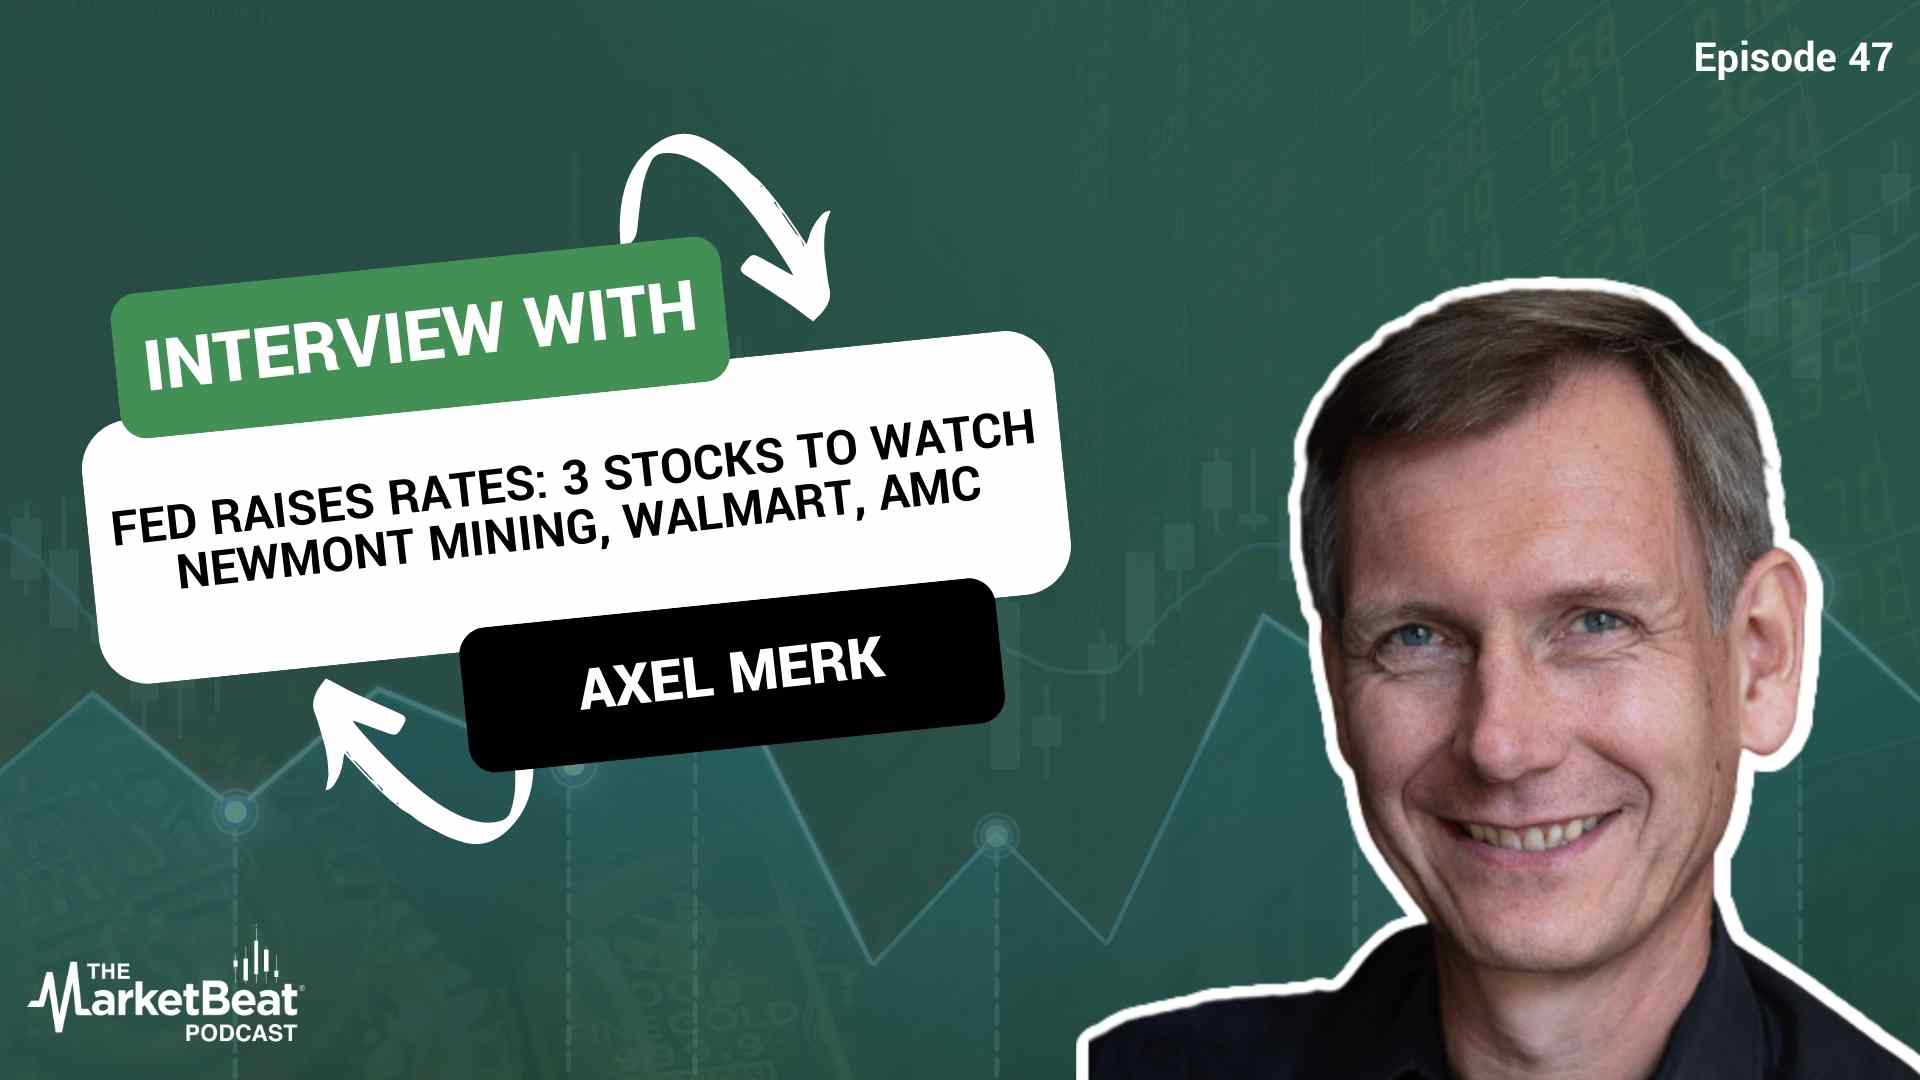 Fed Raises Rates: 3 Stocks to Watch Newmont Mining, Walmart, AMC (Episode 47)